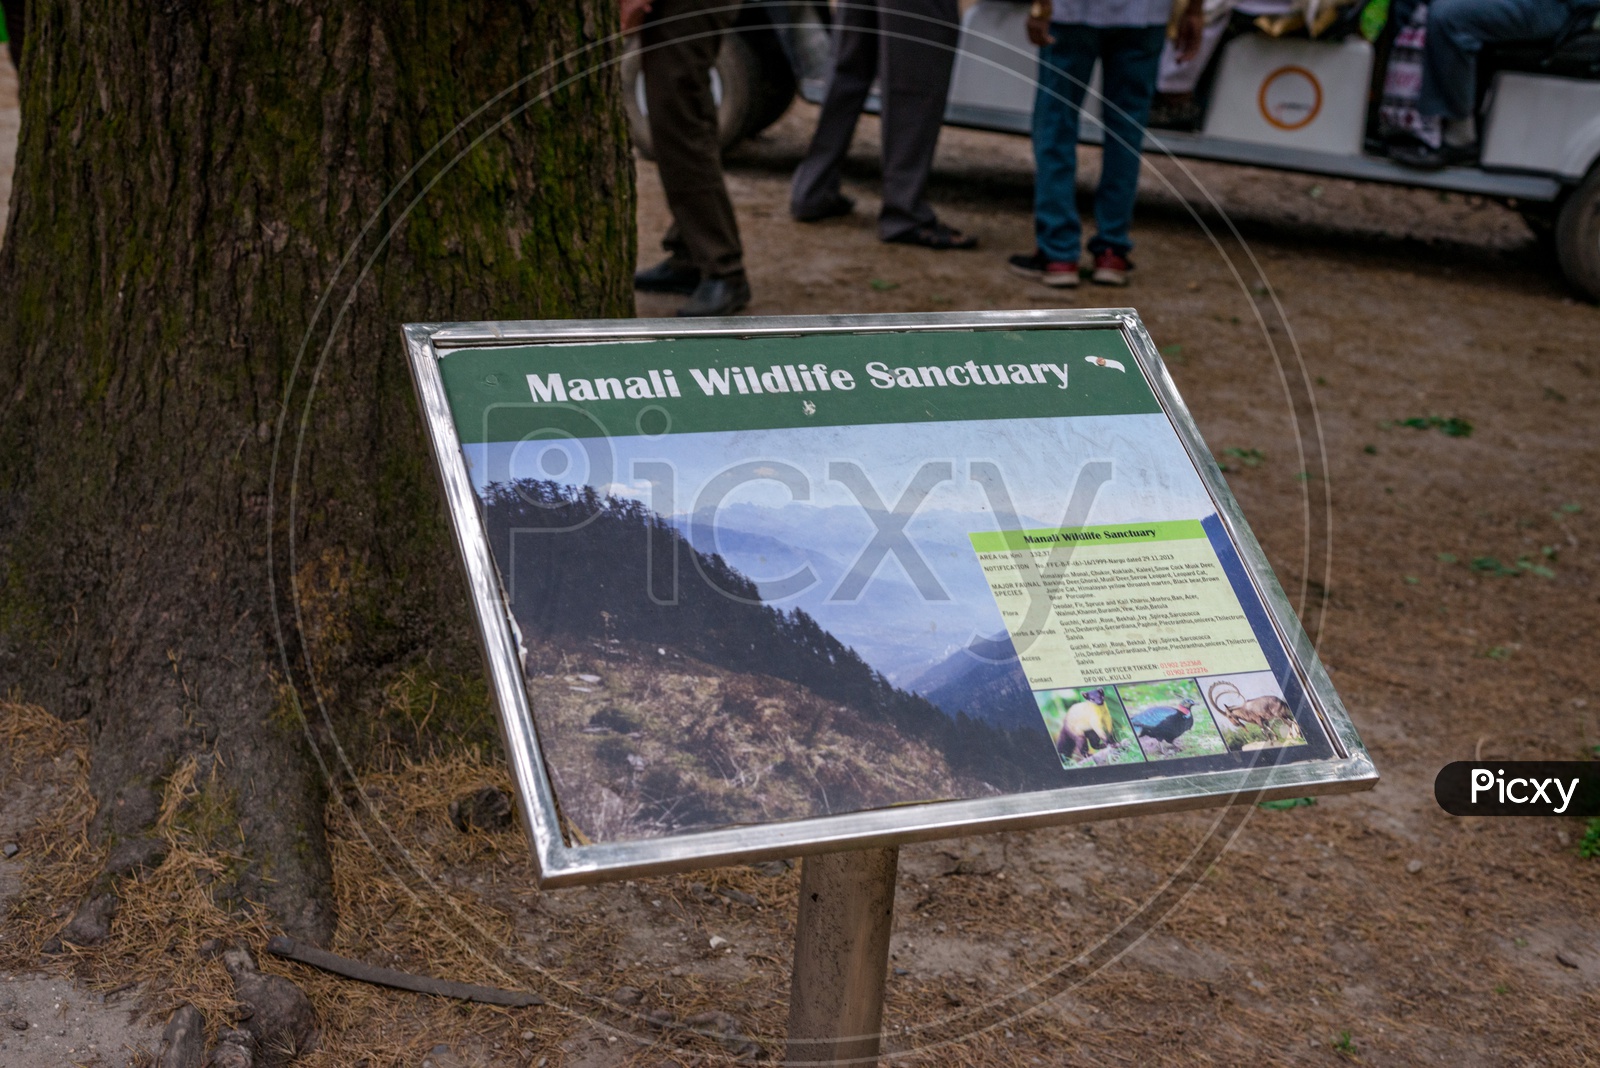 Wildlife Information Board at Van Vihar National Park in Manali